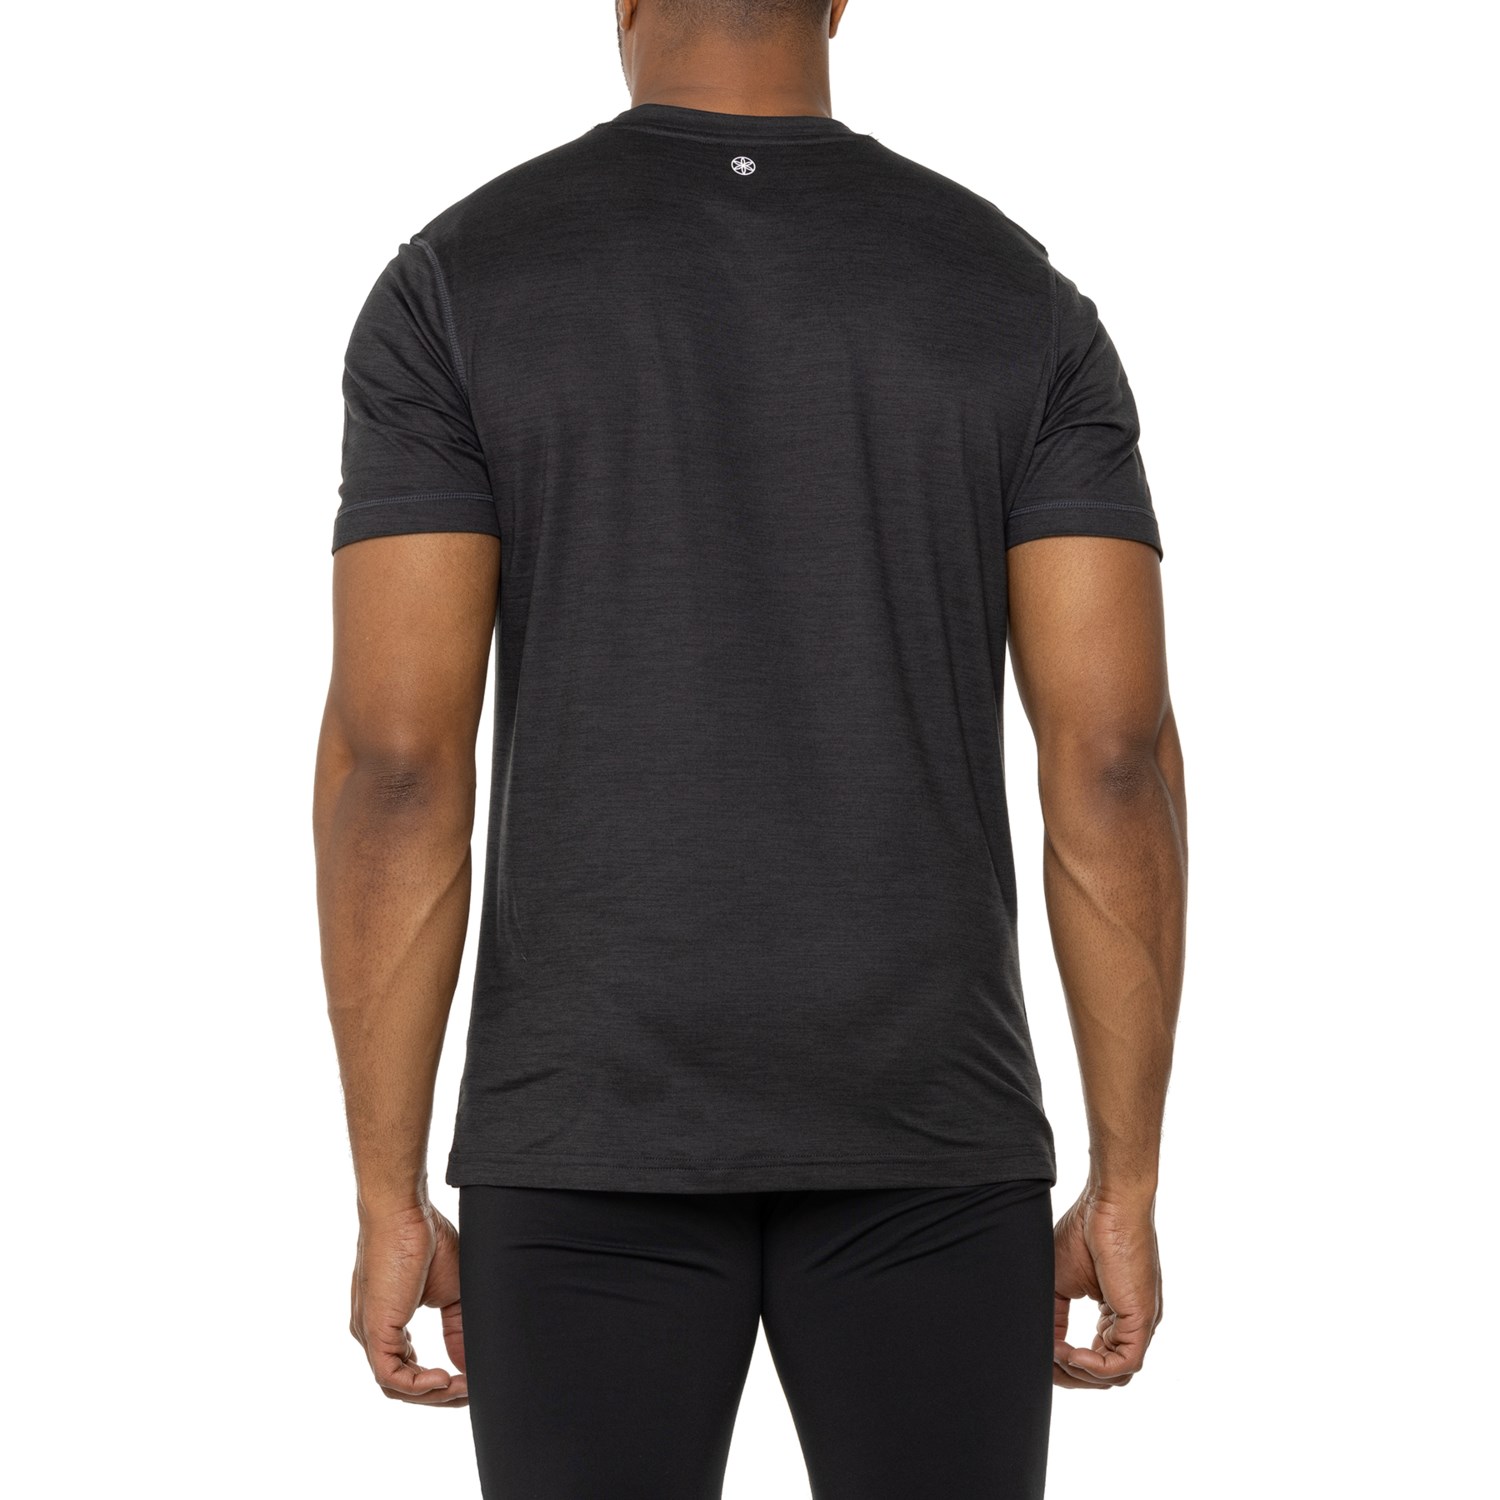 Gaiam Everyday Basic 2.0 T-Shirt - Short Sleeve - Save 76%